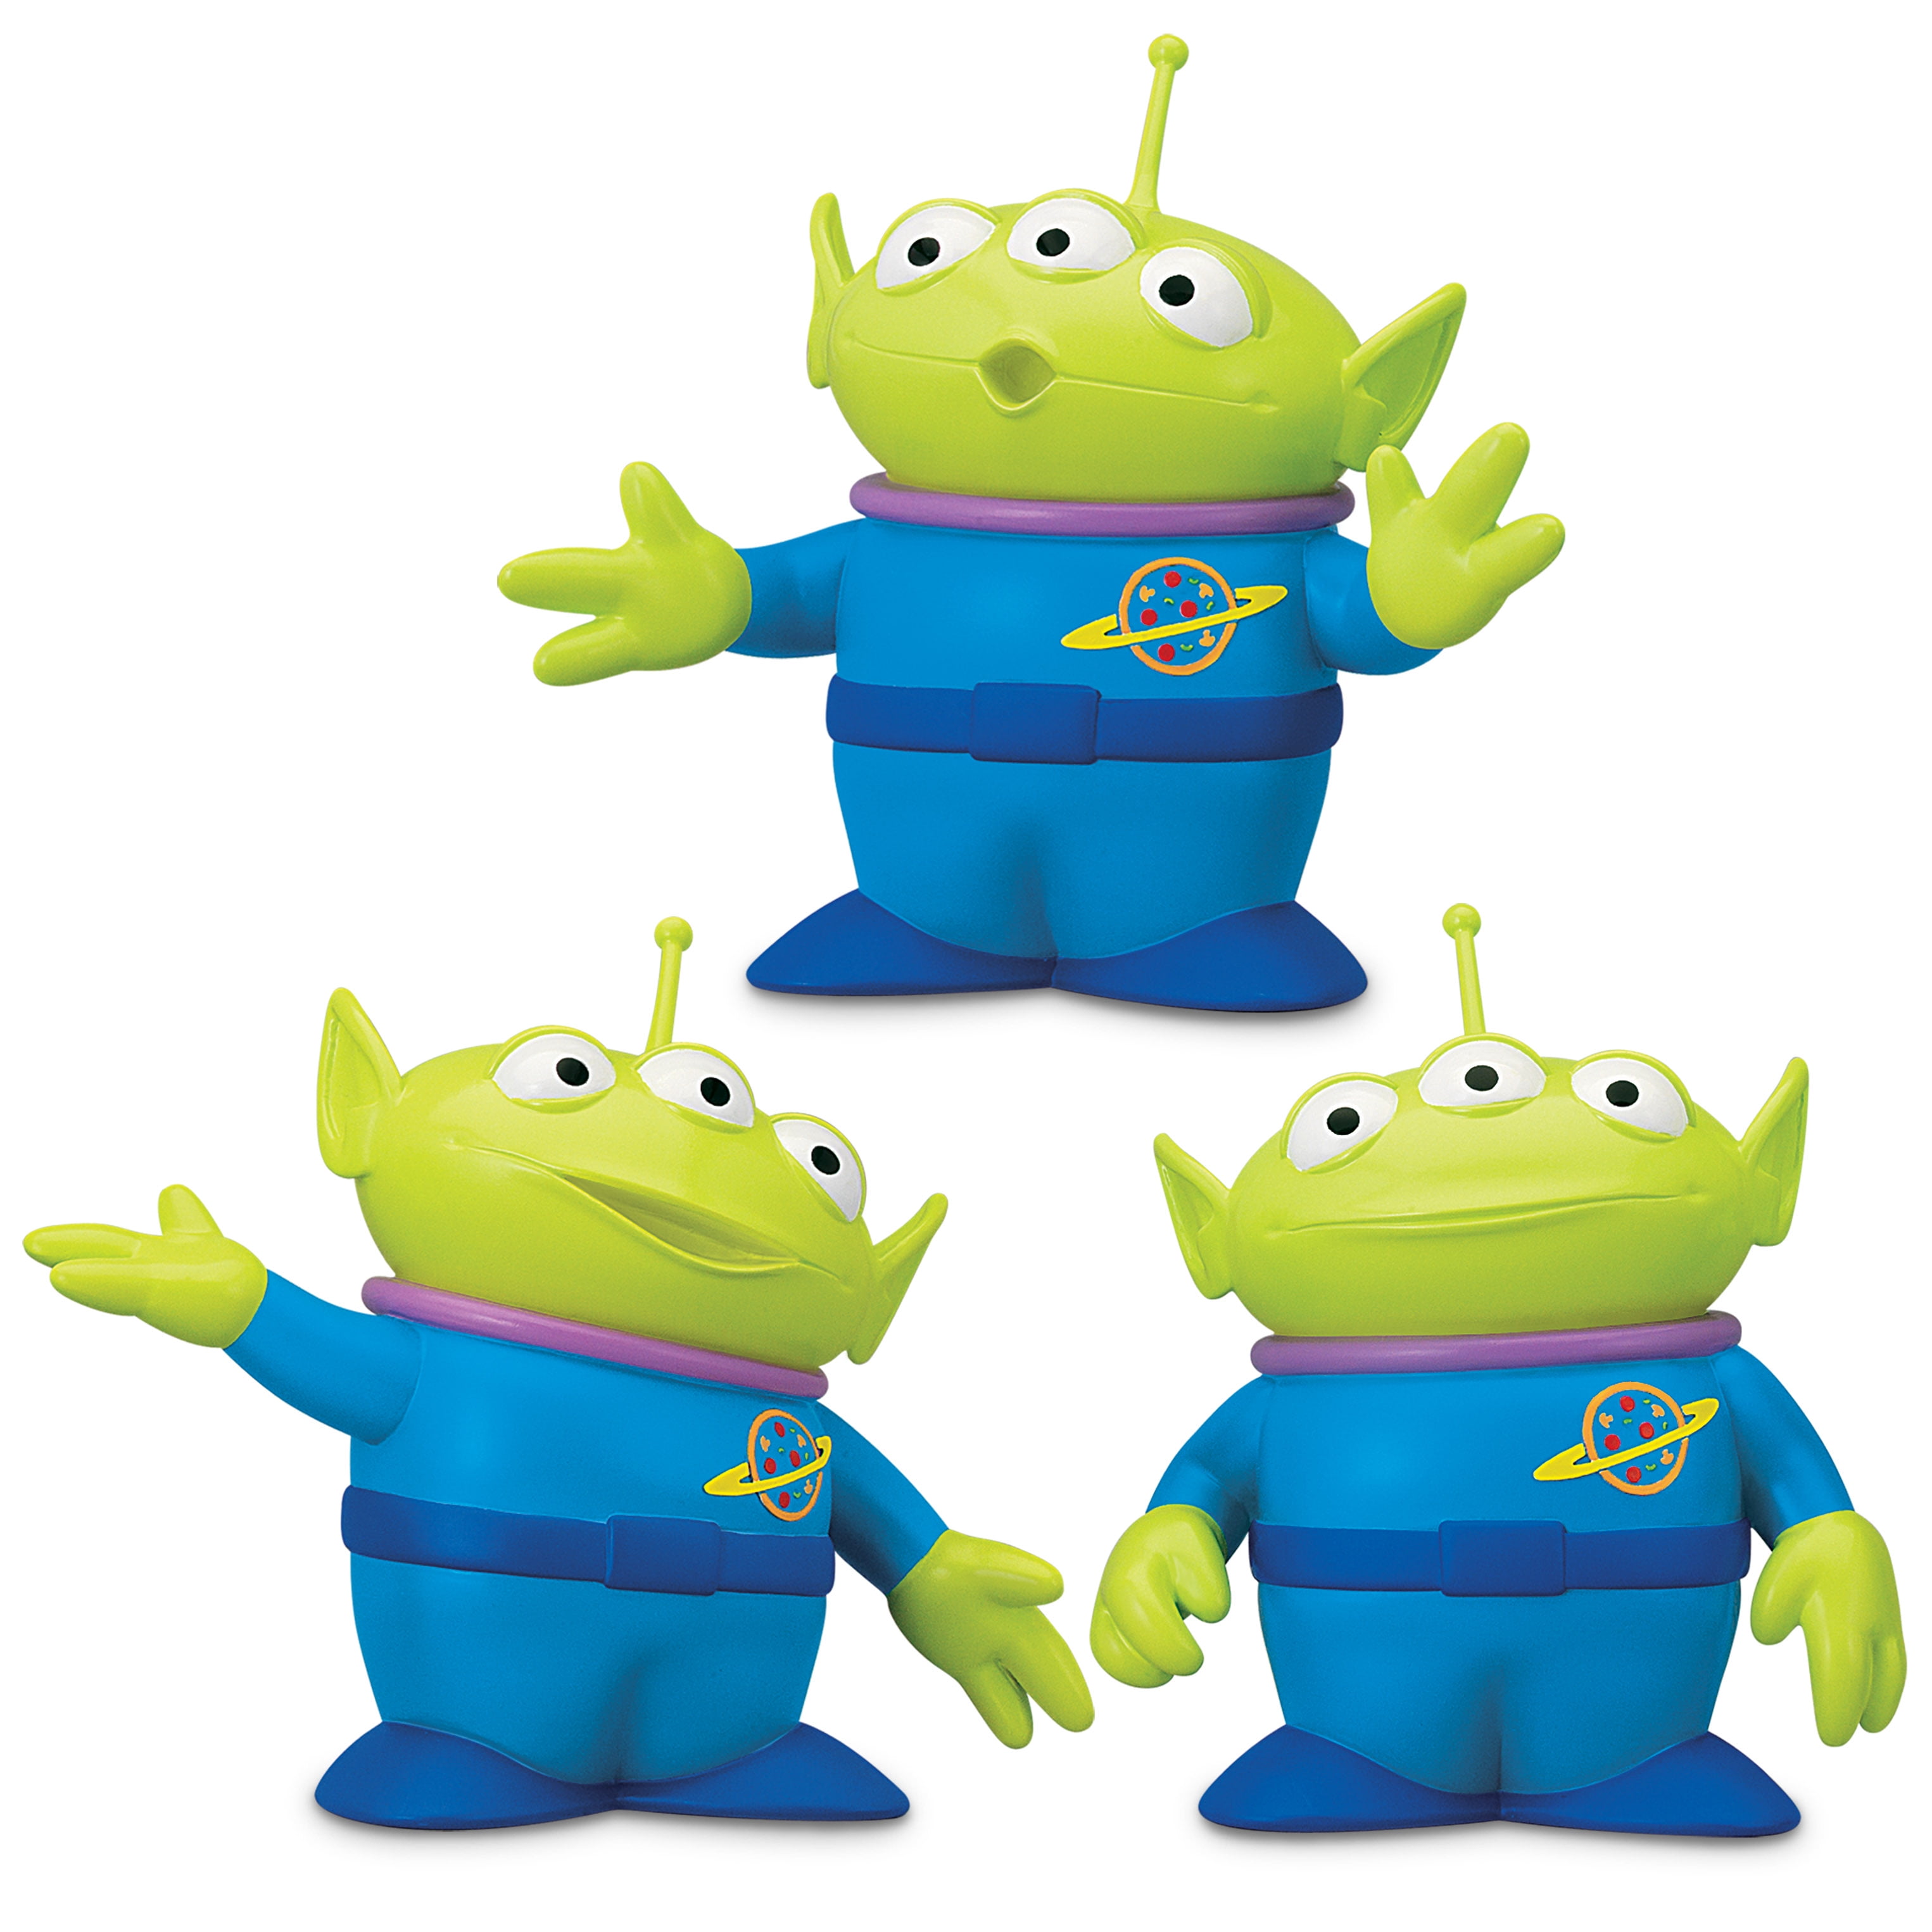 Disney Pixar Toy Story Space Alien Assortment Walmart Com Walmart Com